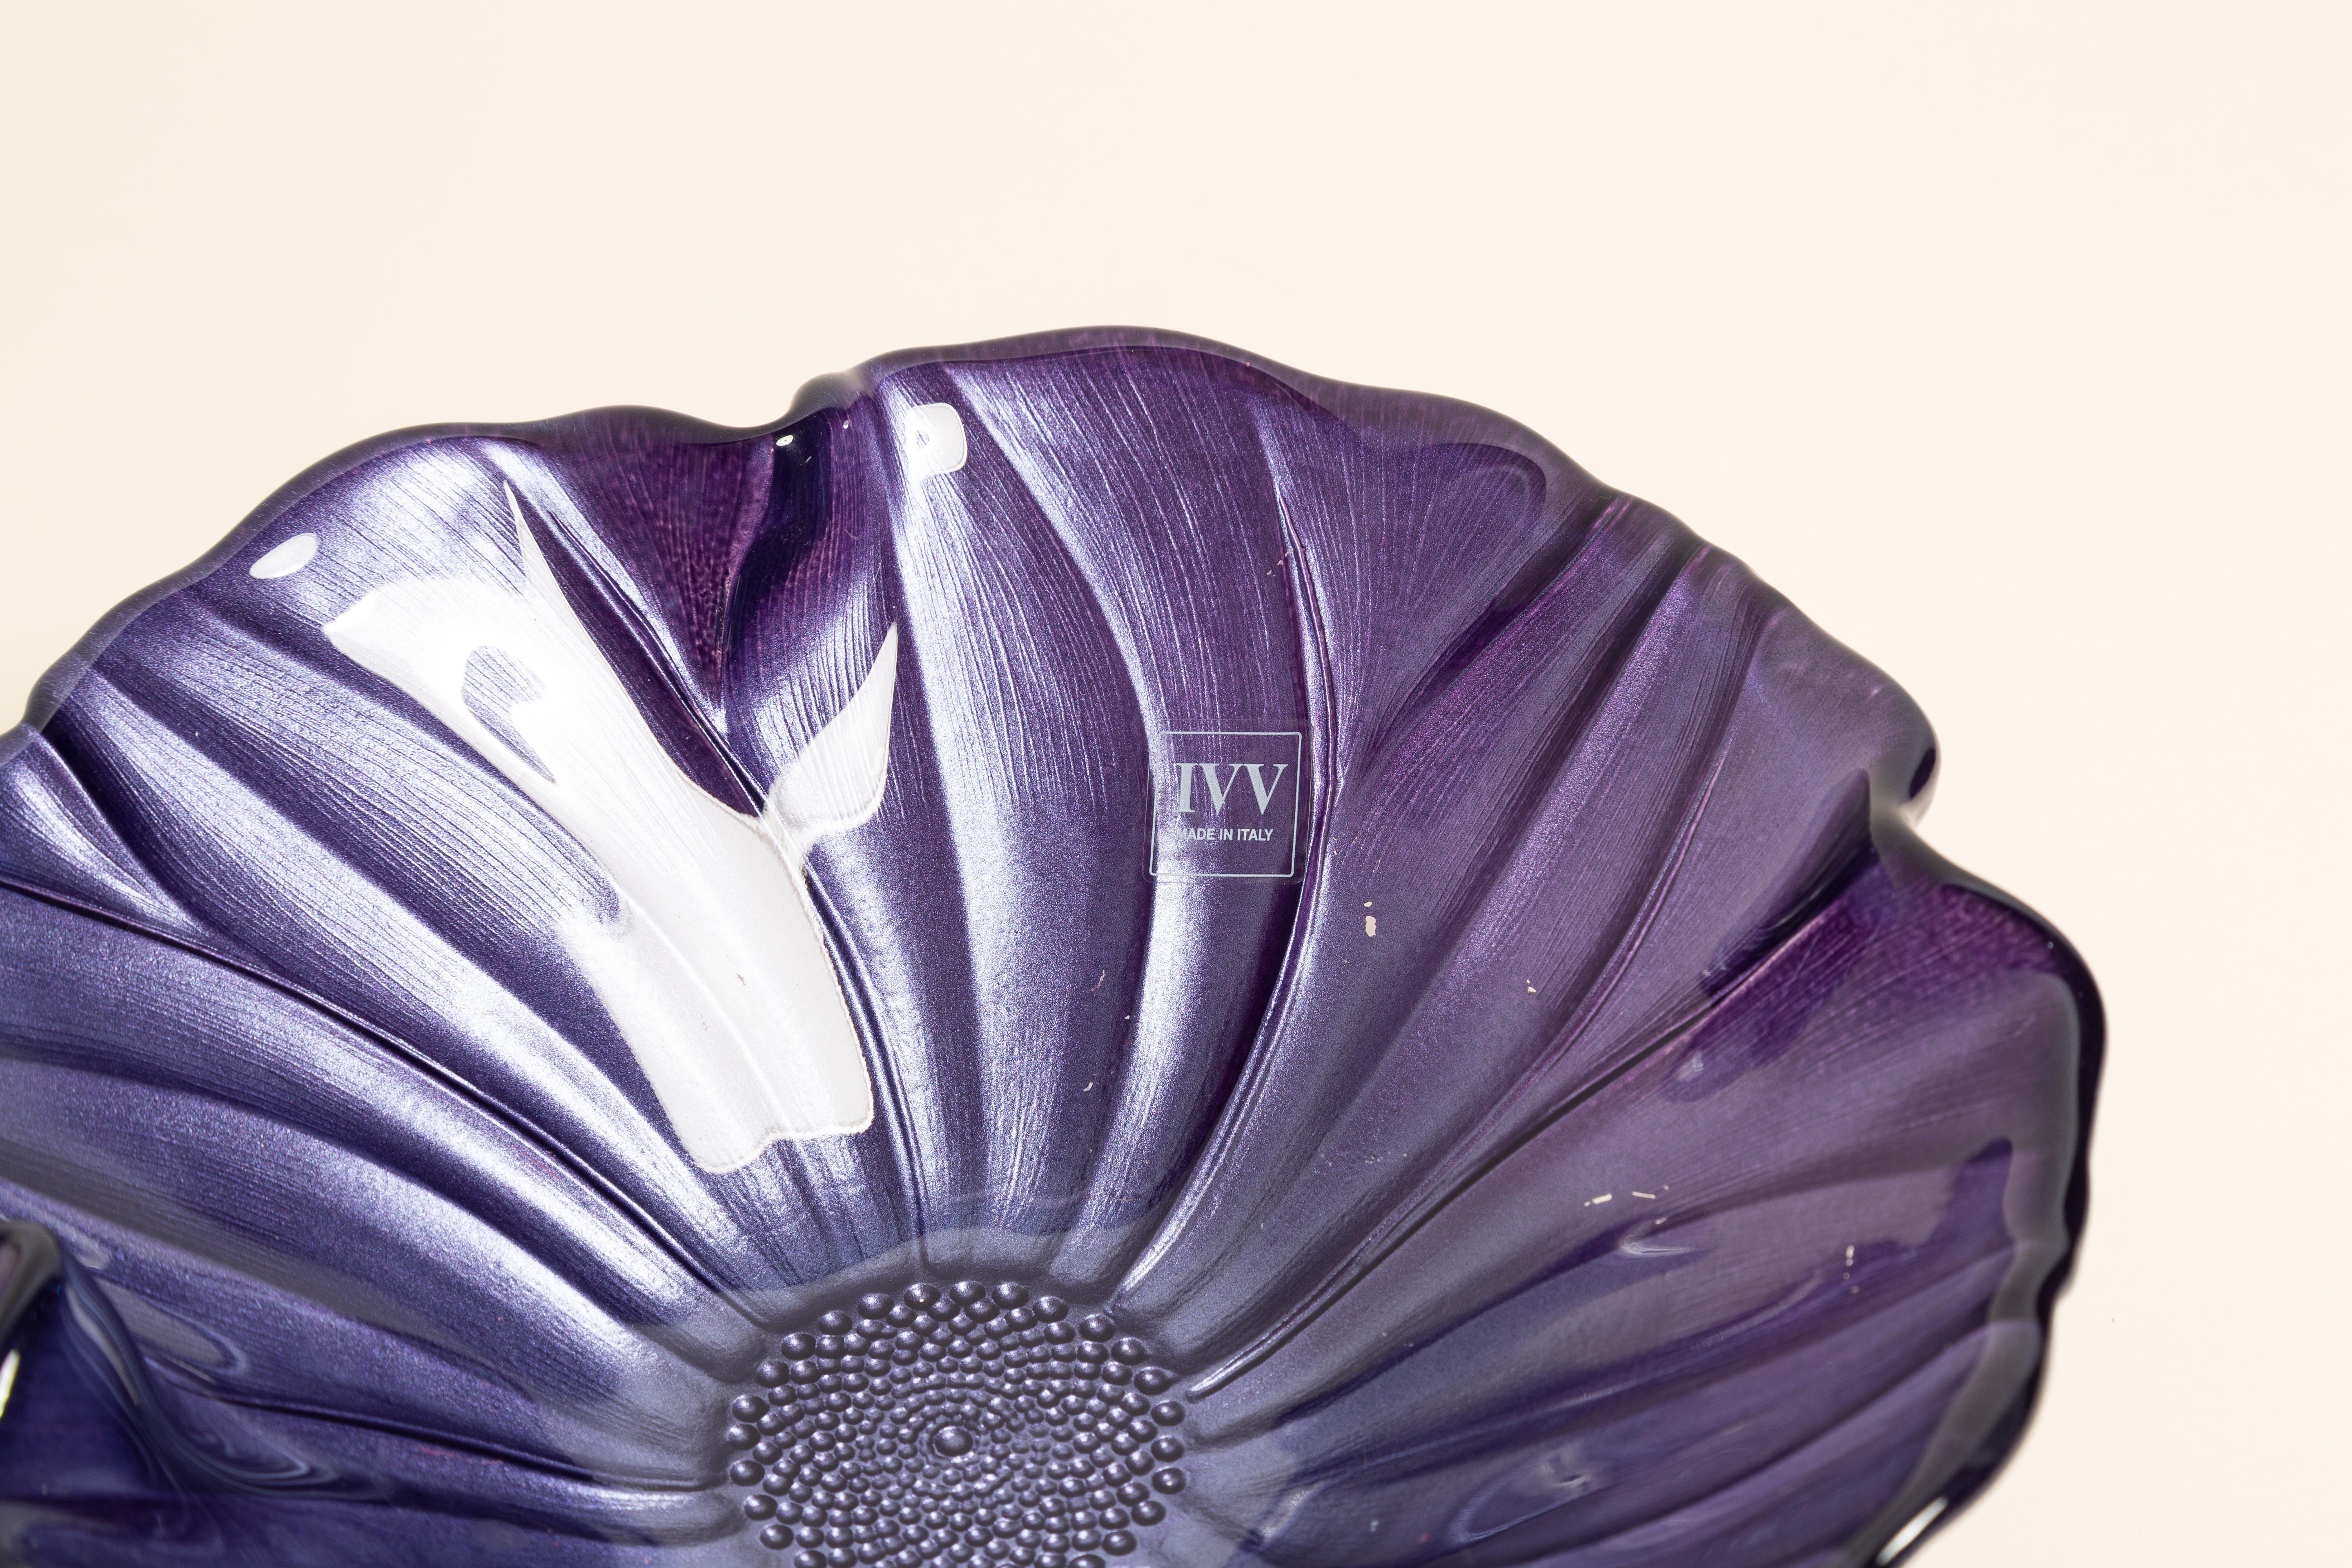 Midcentury Vintage Violet Purple Flower Decorative Glass Plate, Italy, 1960s For Sale 2